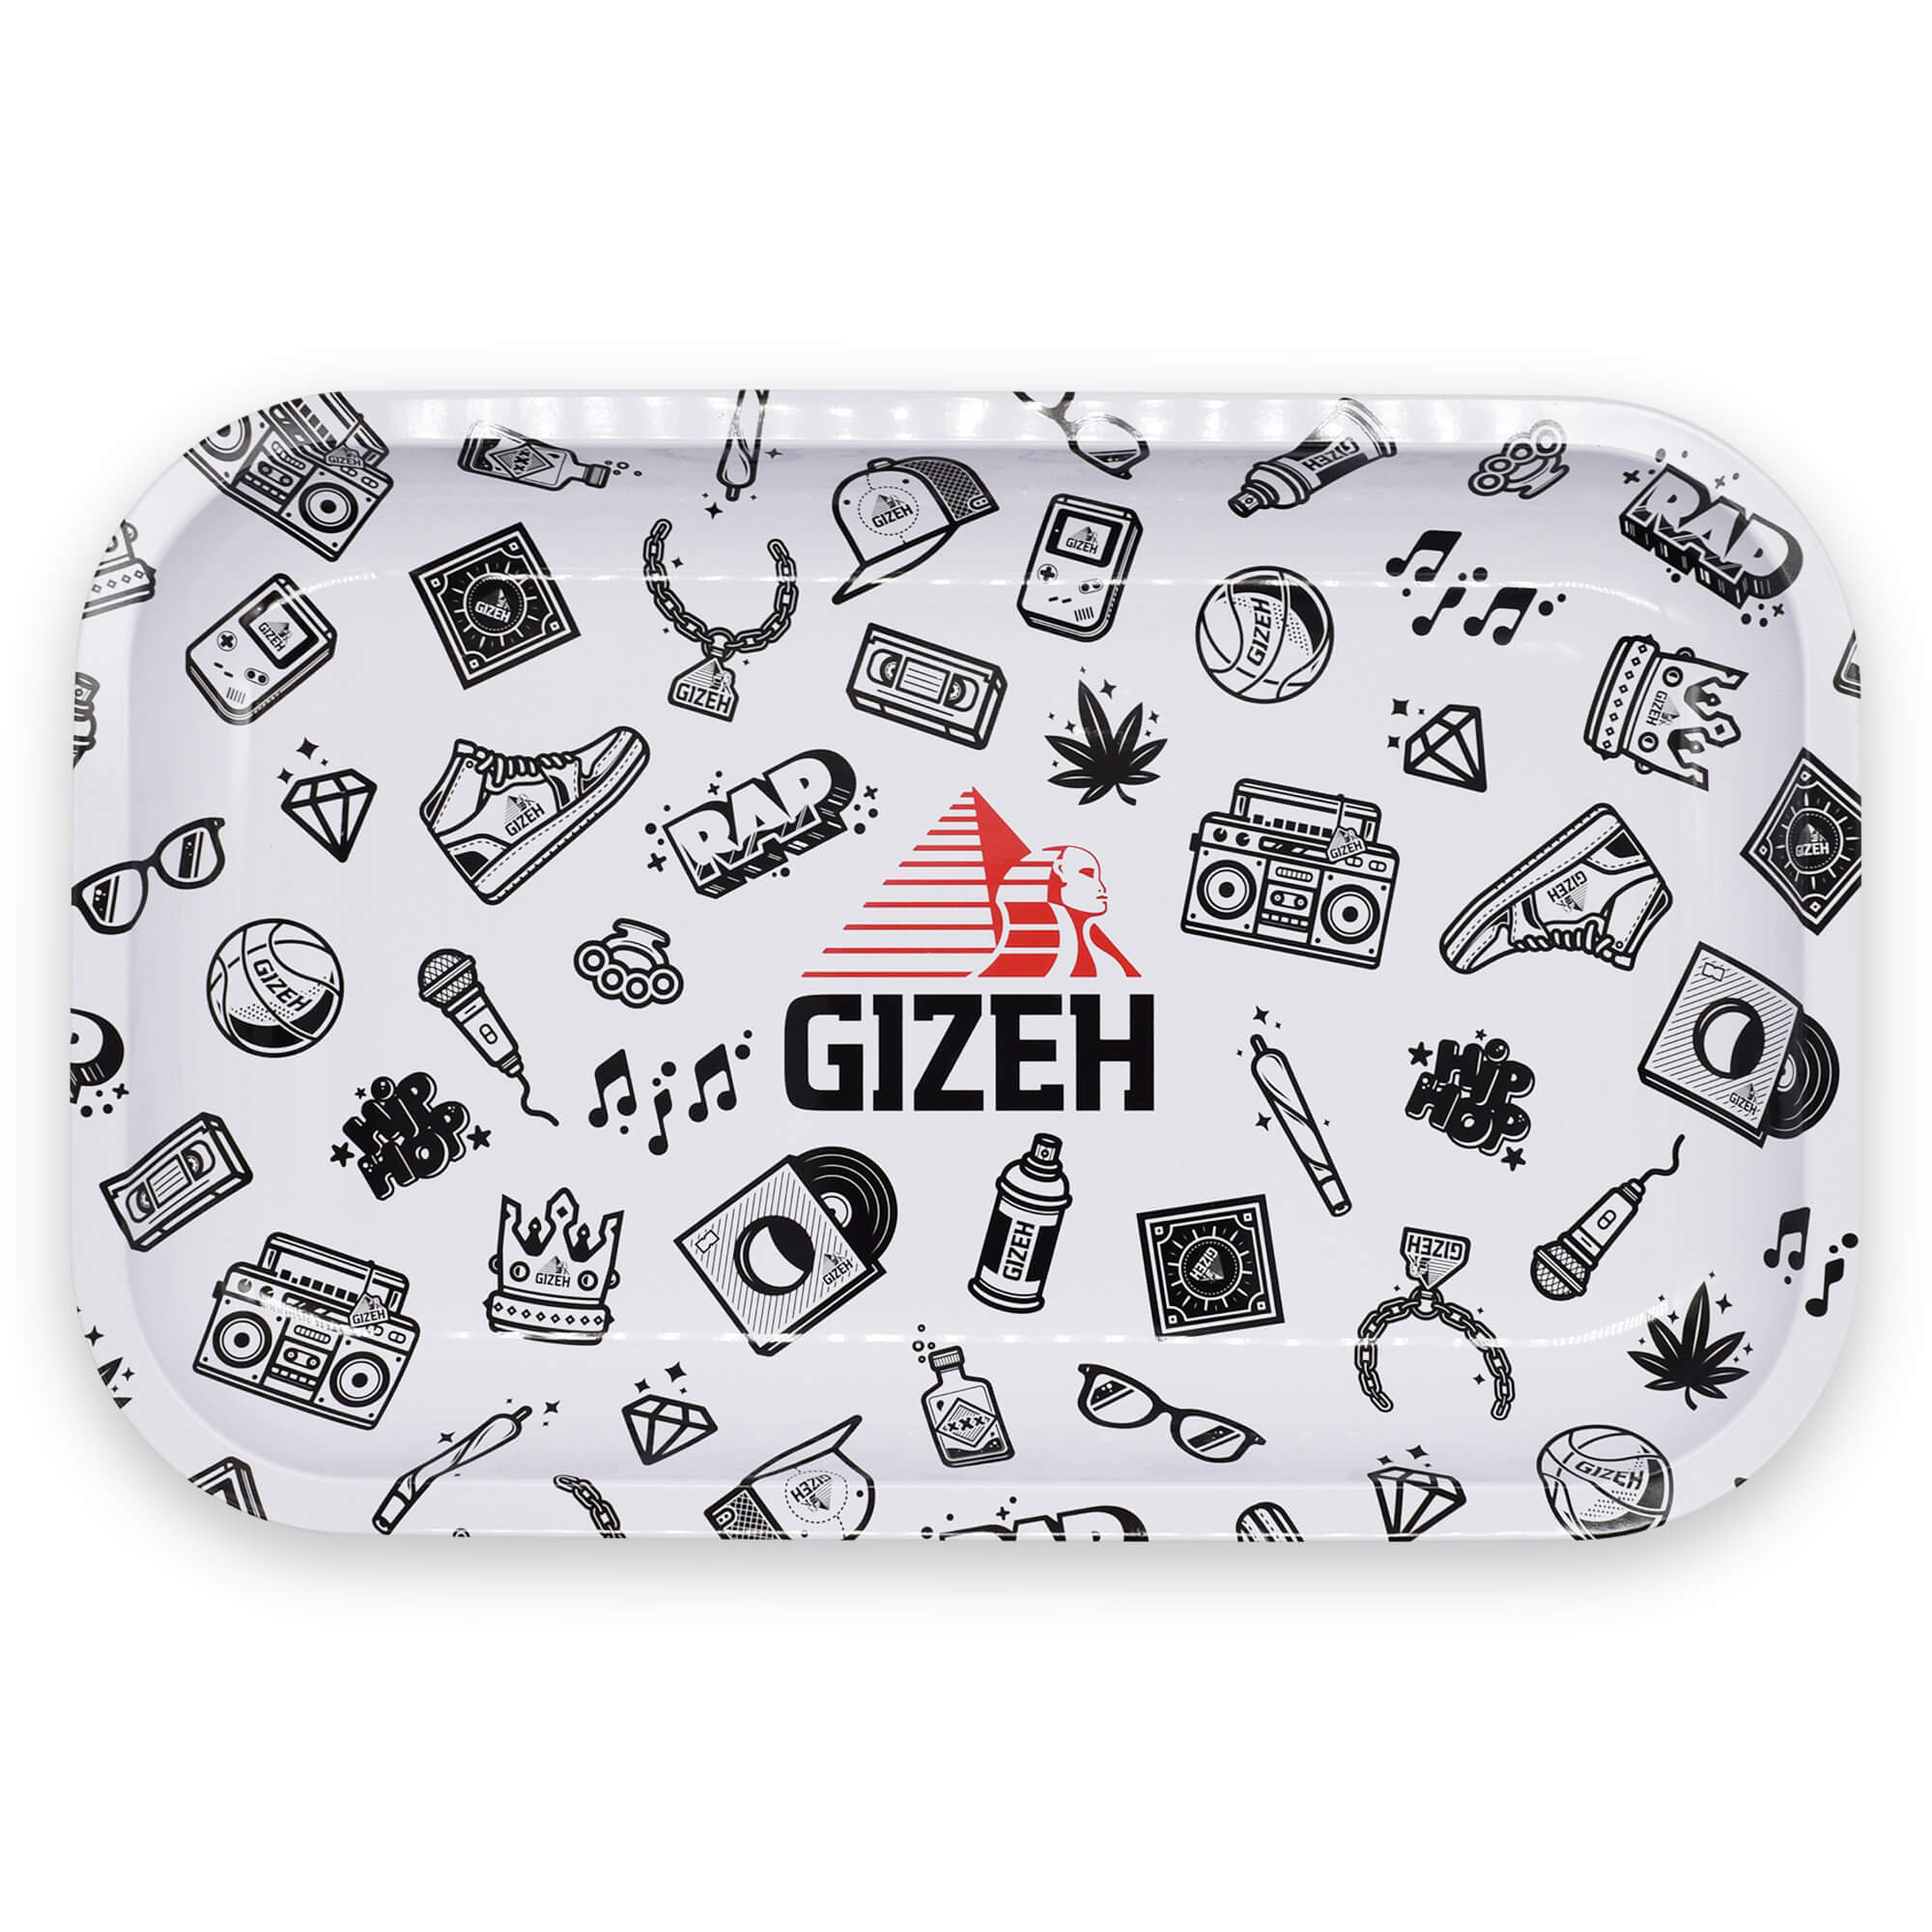 GIZEH Comic Mix White Large Rolling Tray Stoner Set